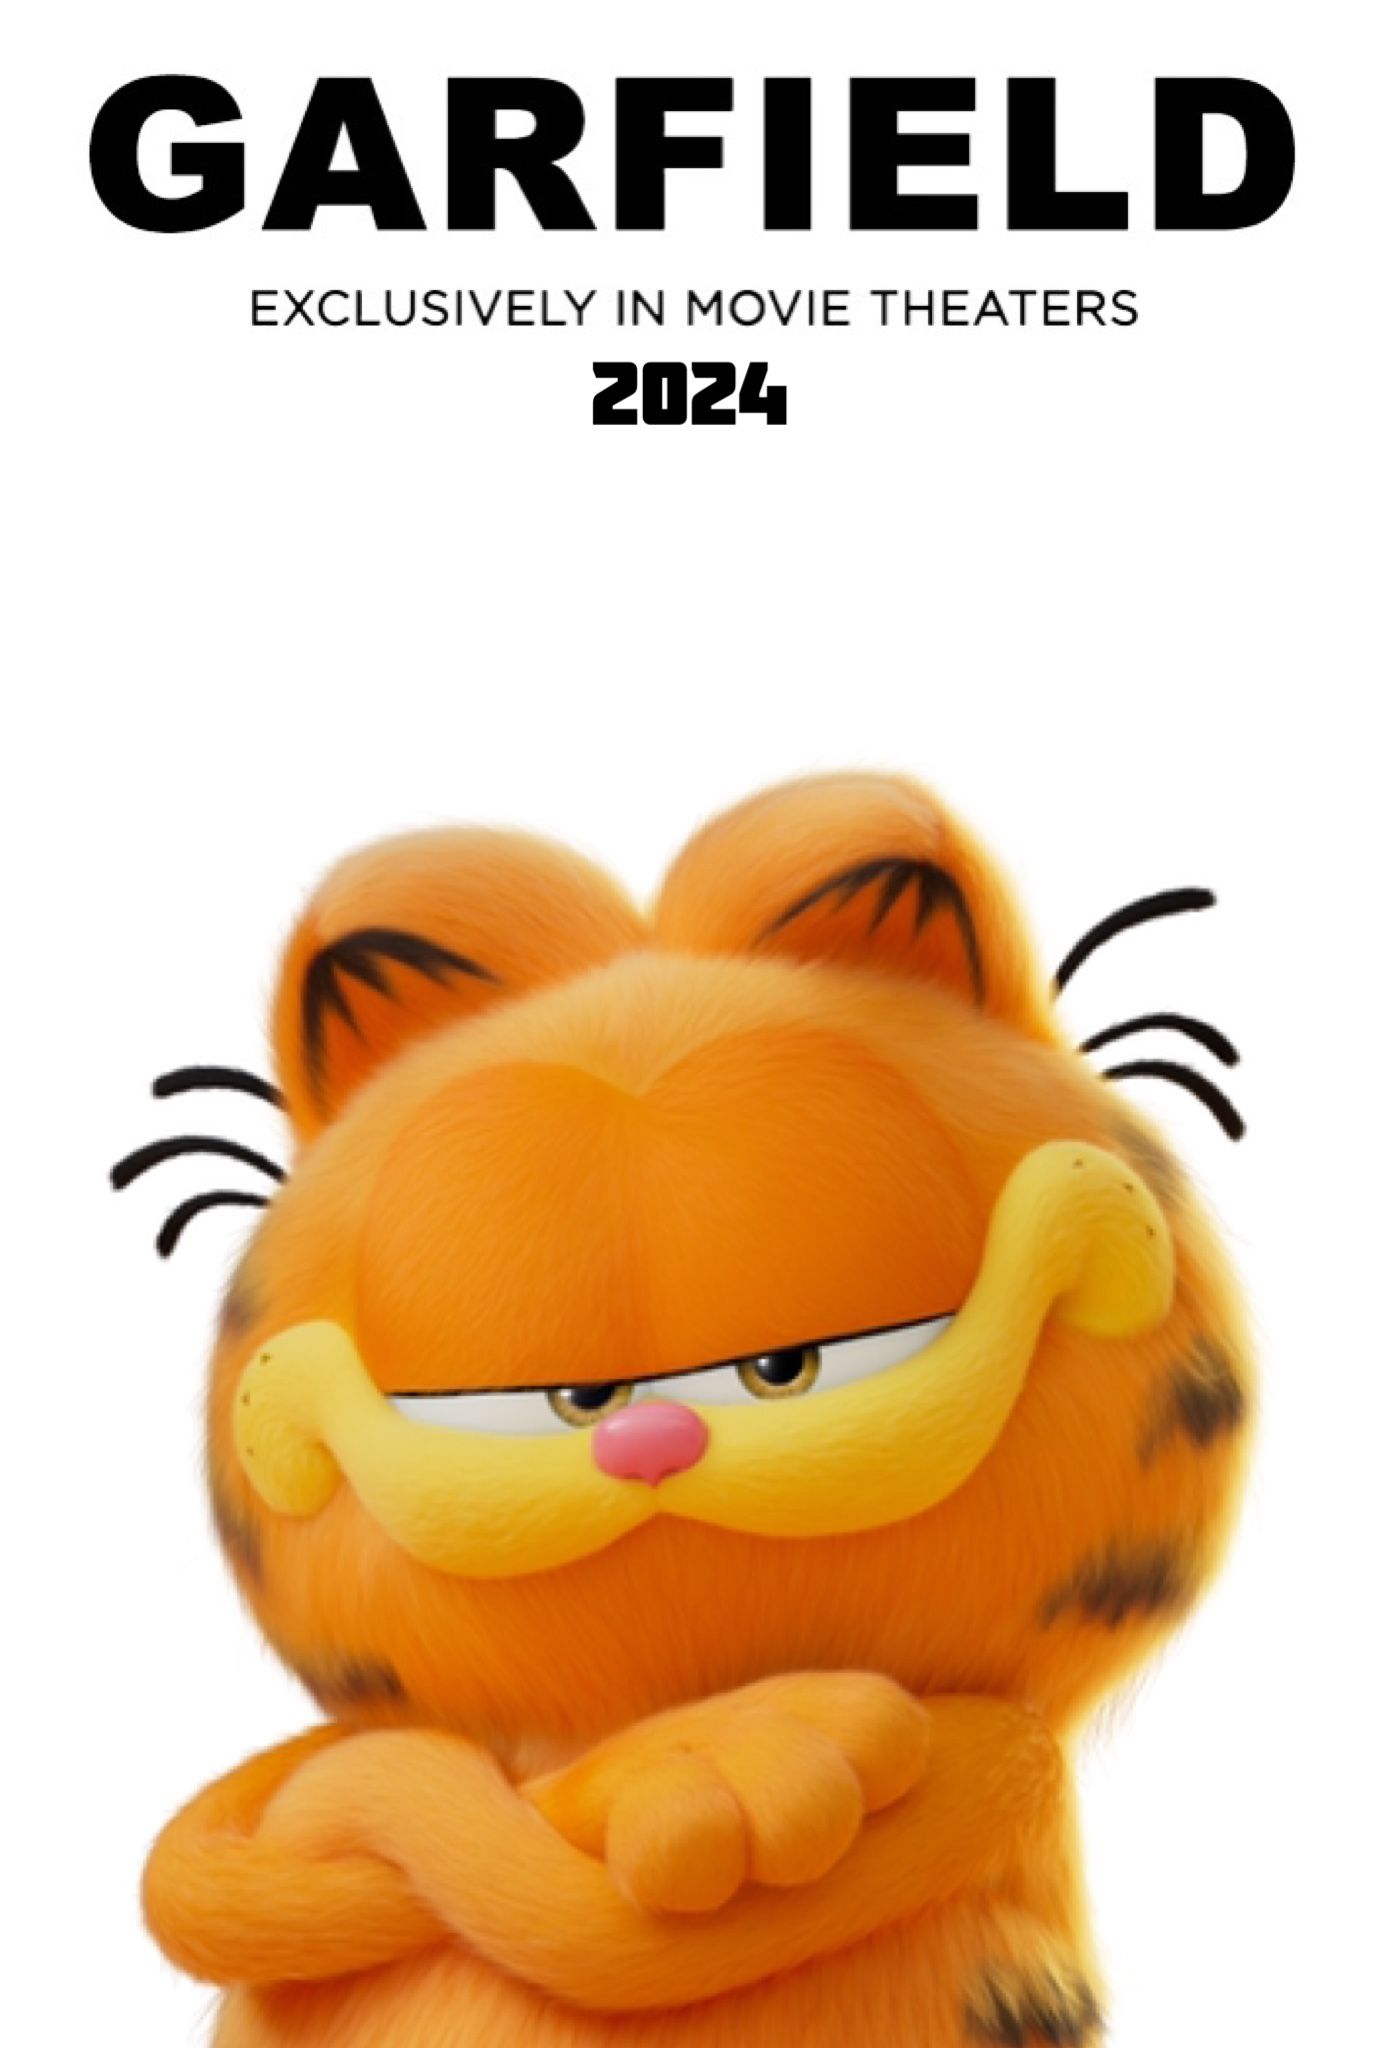 Garfield 2024 movie poster